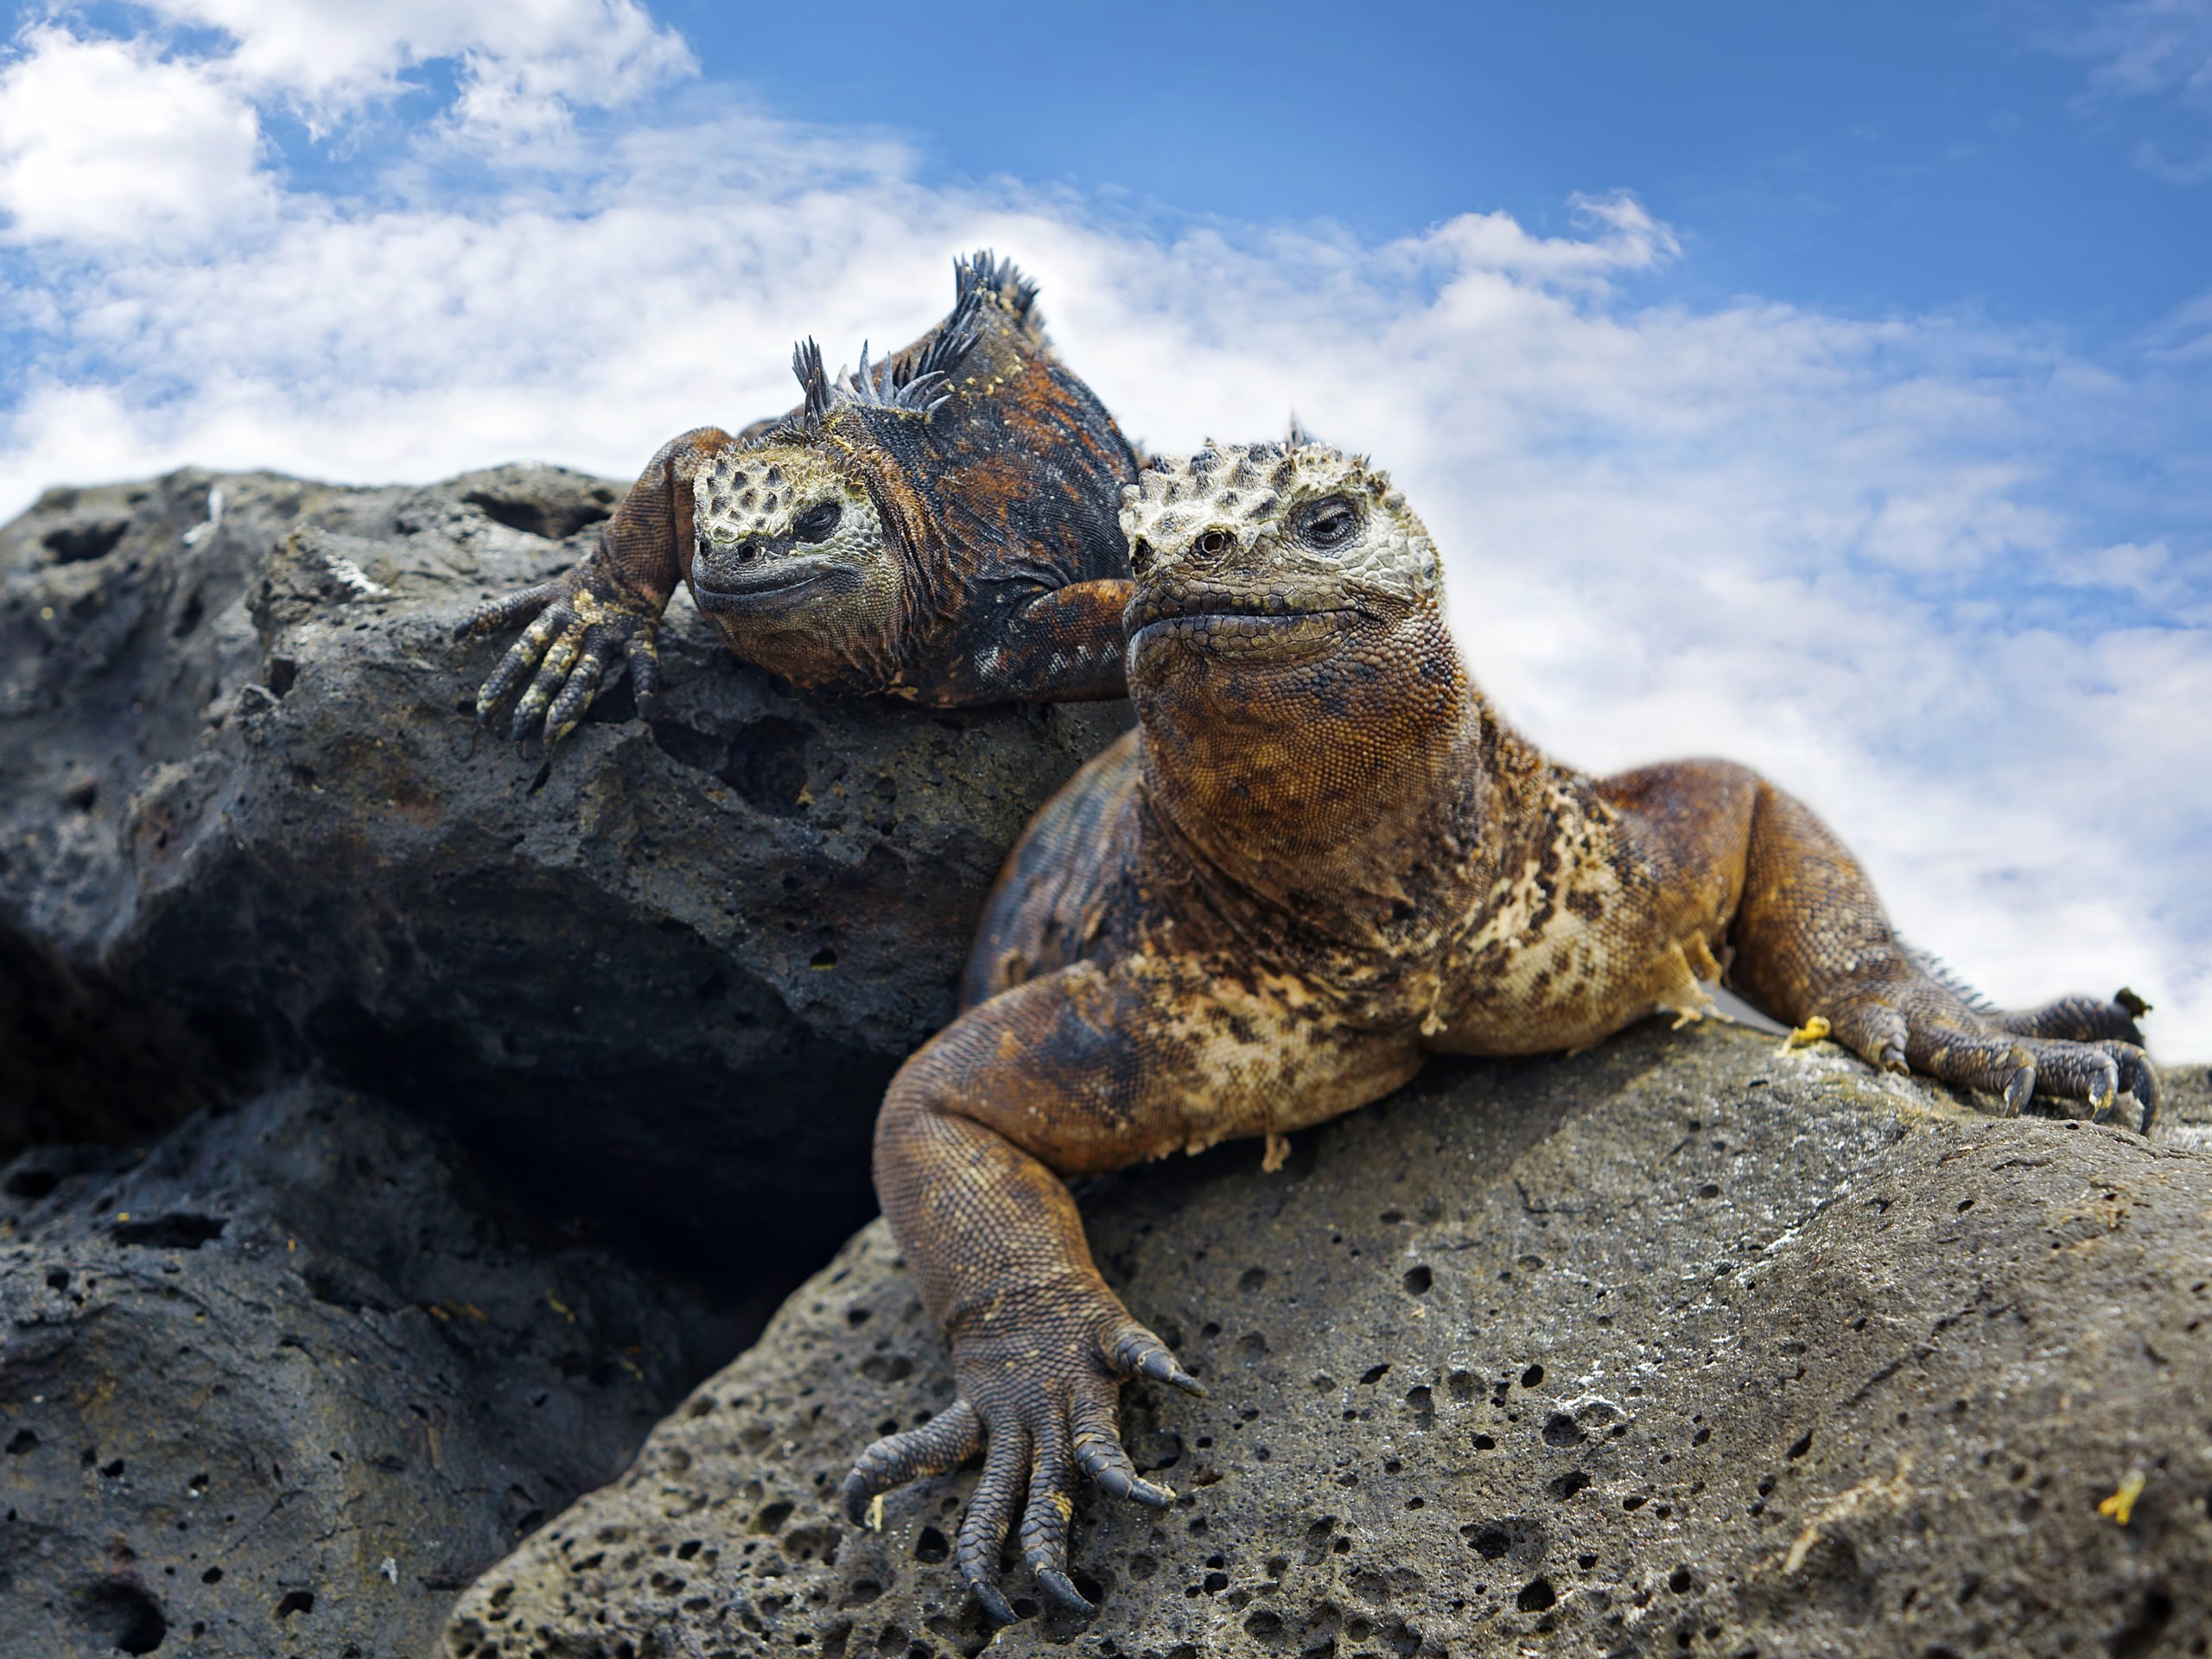 Galápagos Islands adventure: In Darwin's footsteps - Australian Geographic